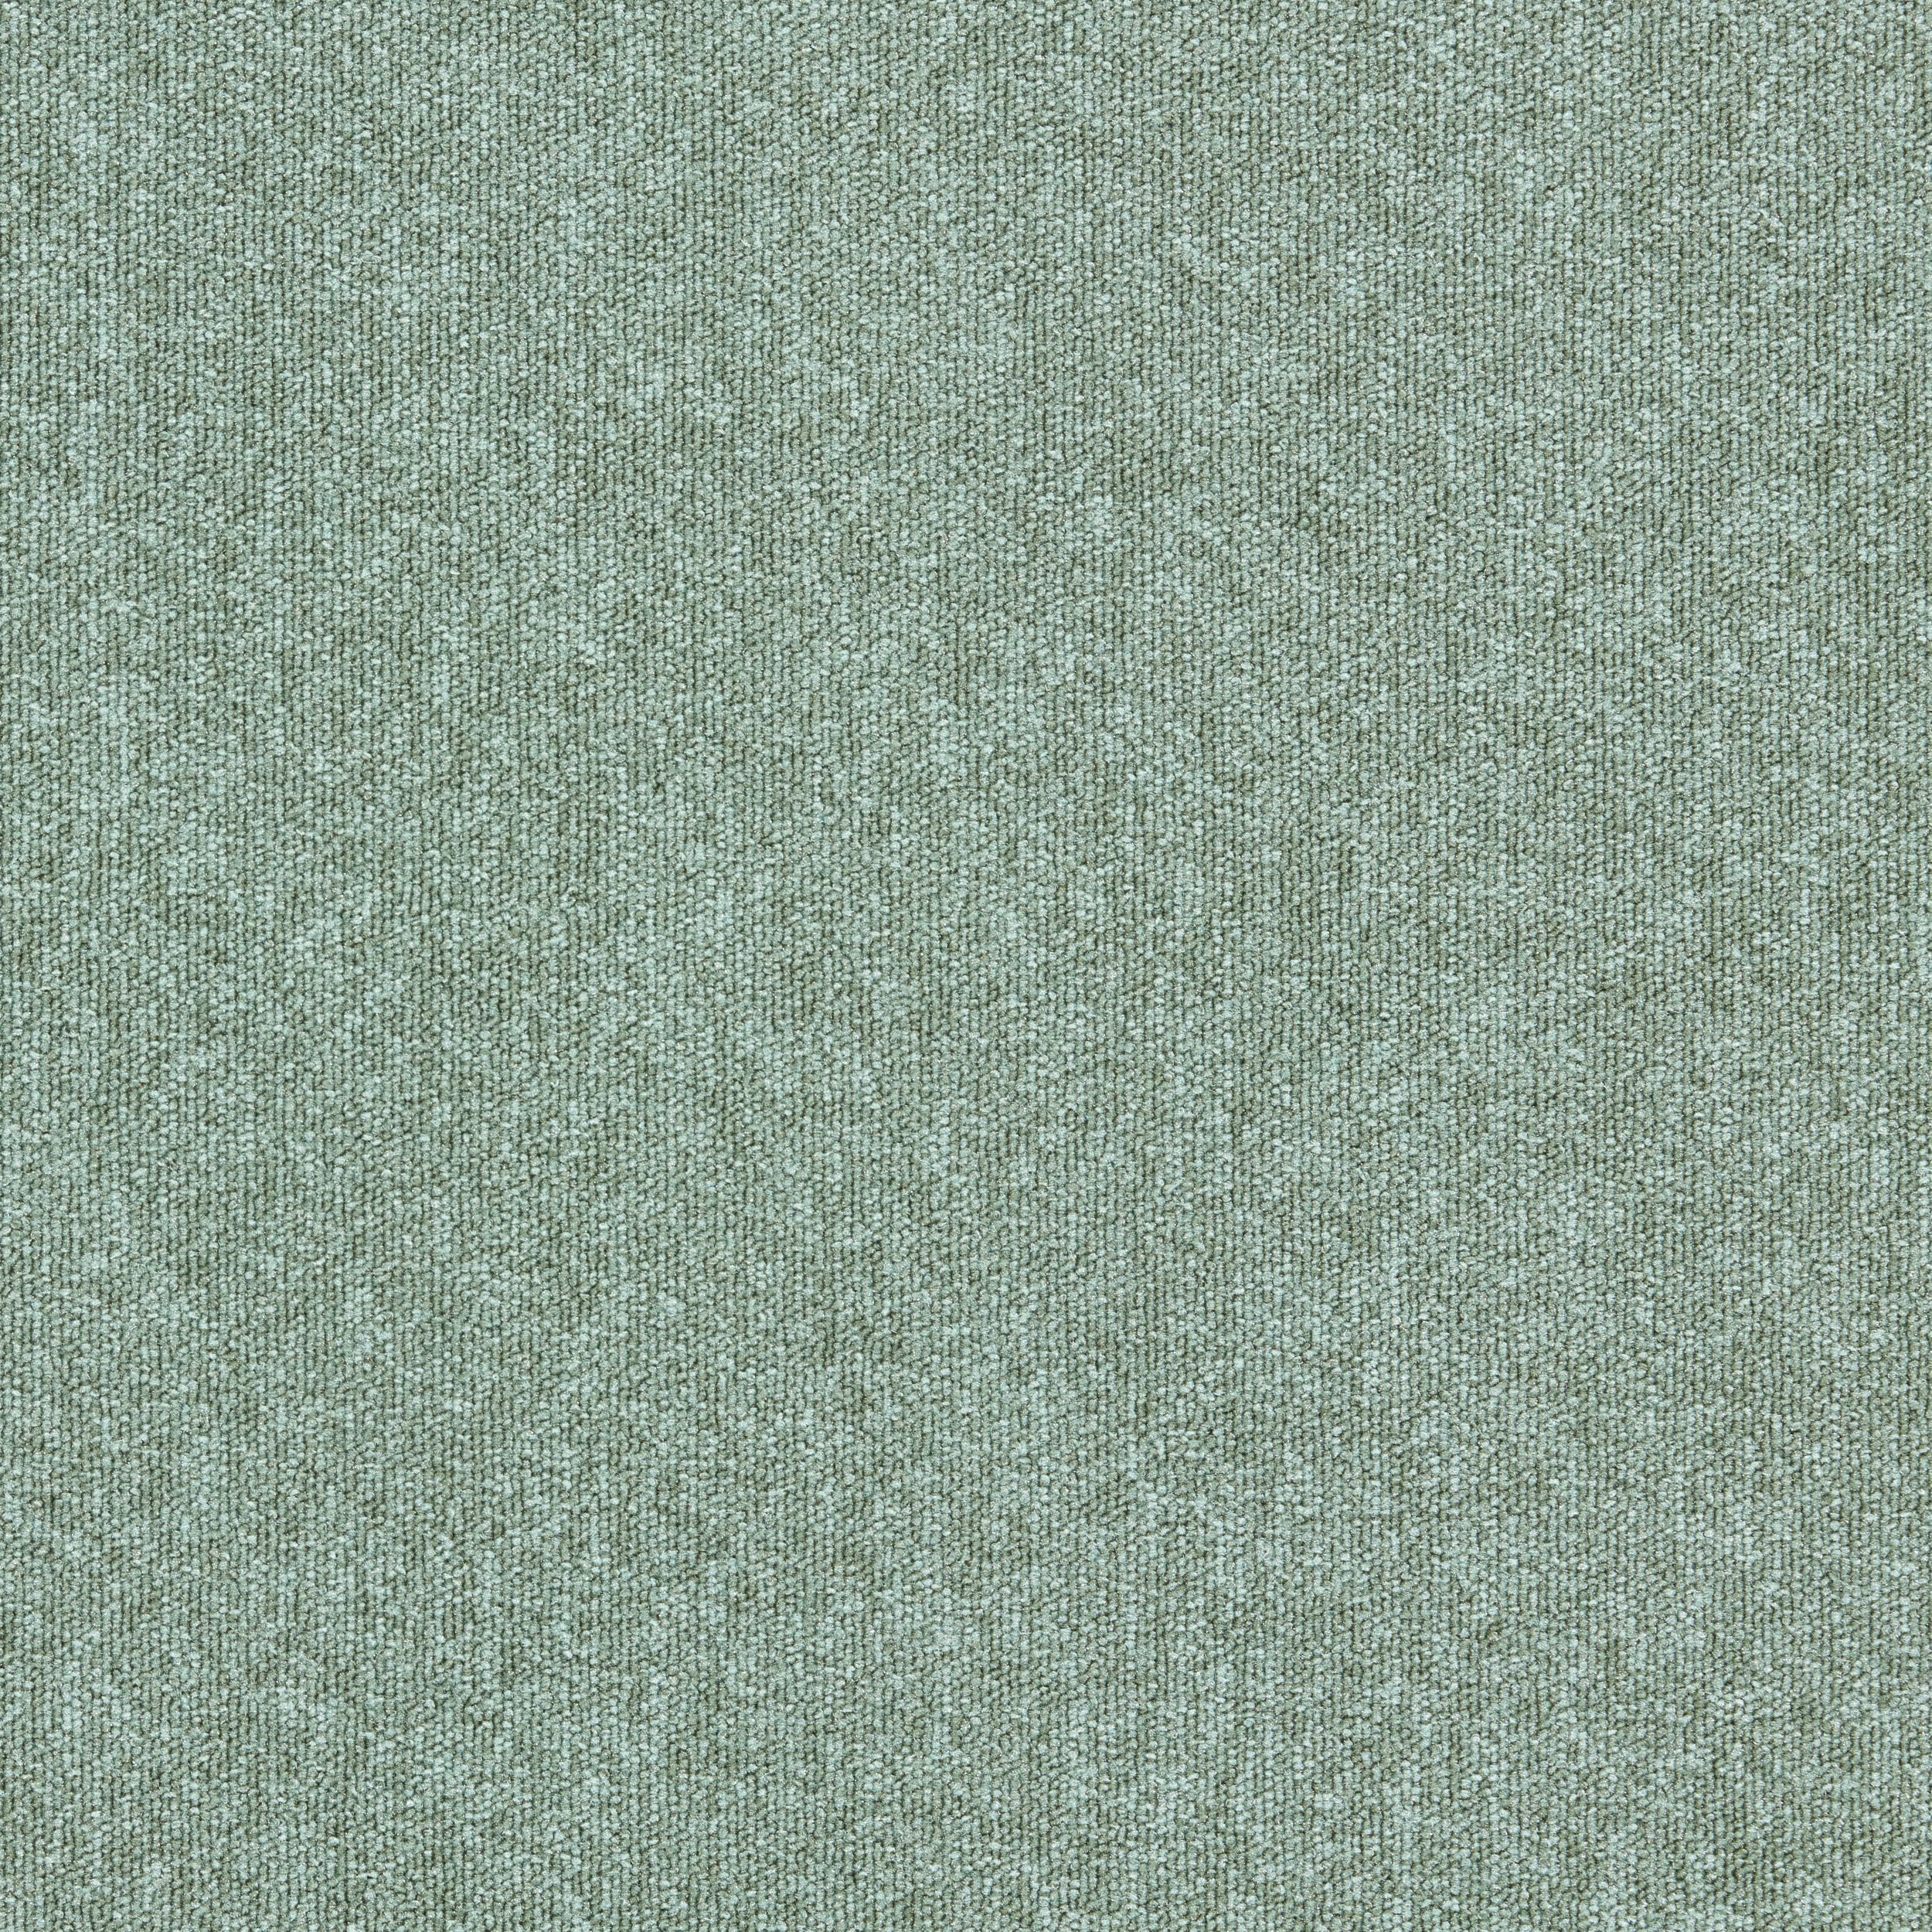 Heuga 580 II carpet tile in Laurel afbeeldingnummer 2